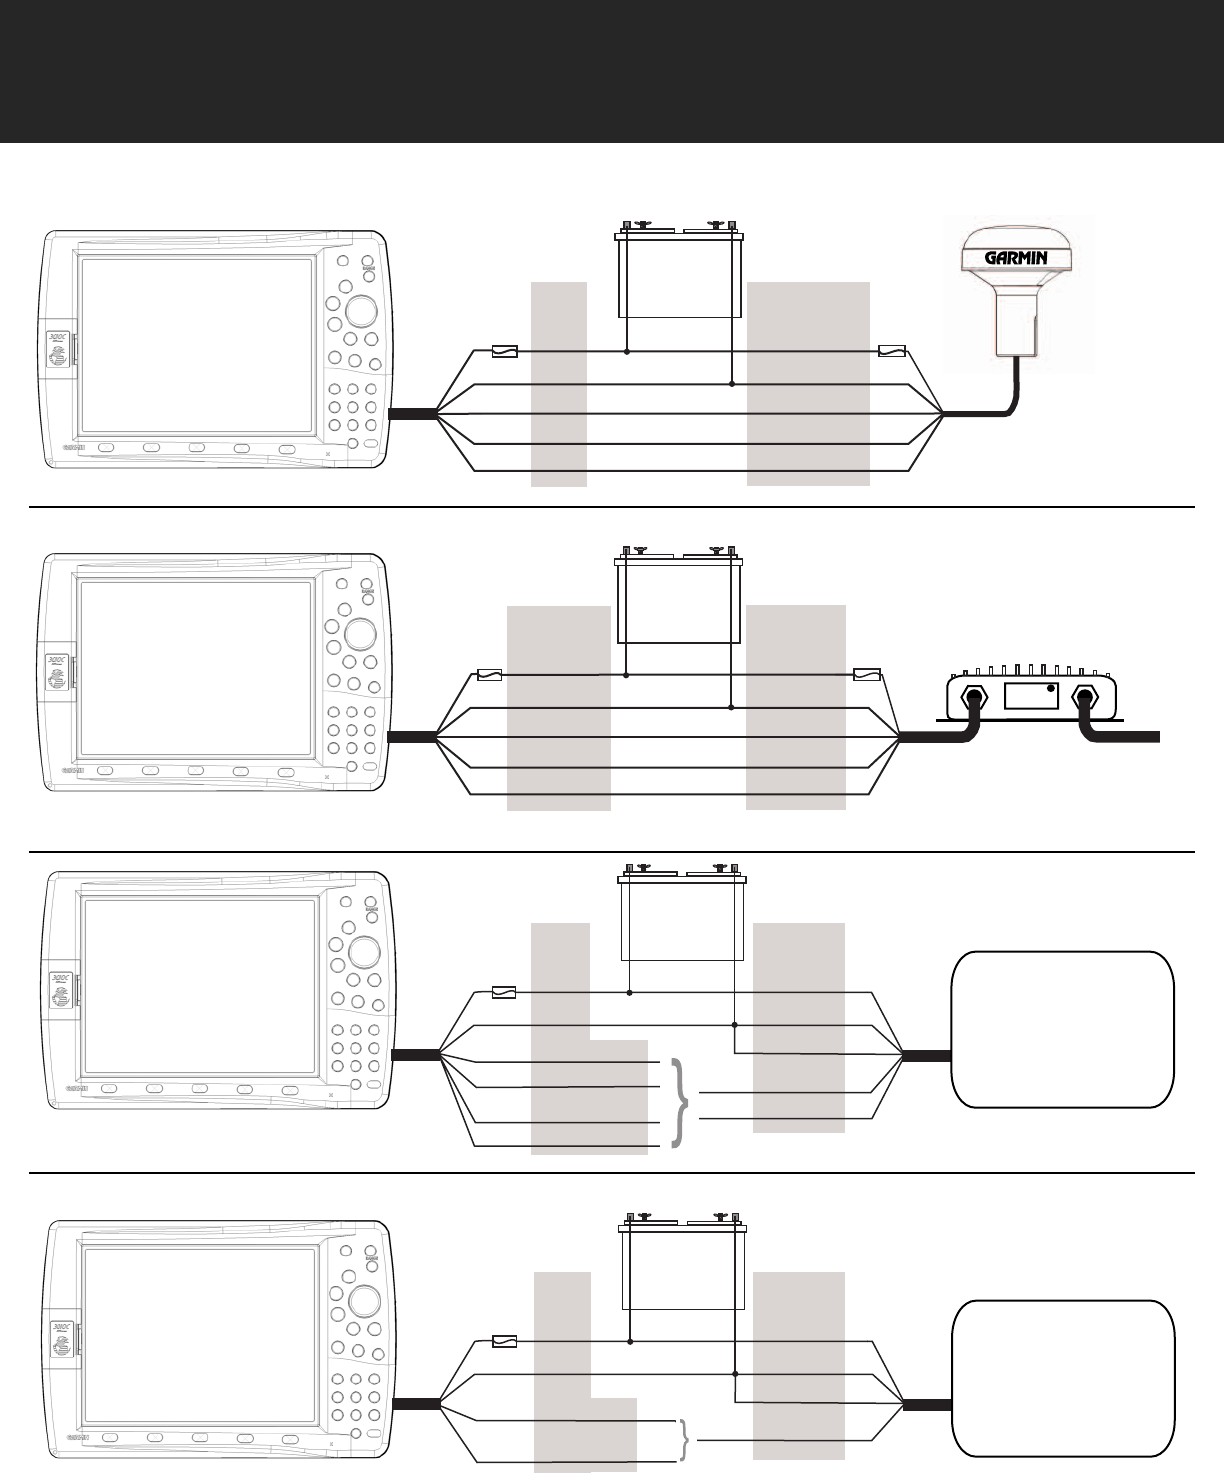 Garmin Nmea 0183 Wiring Diagram Elegant